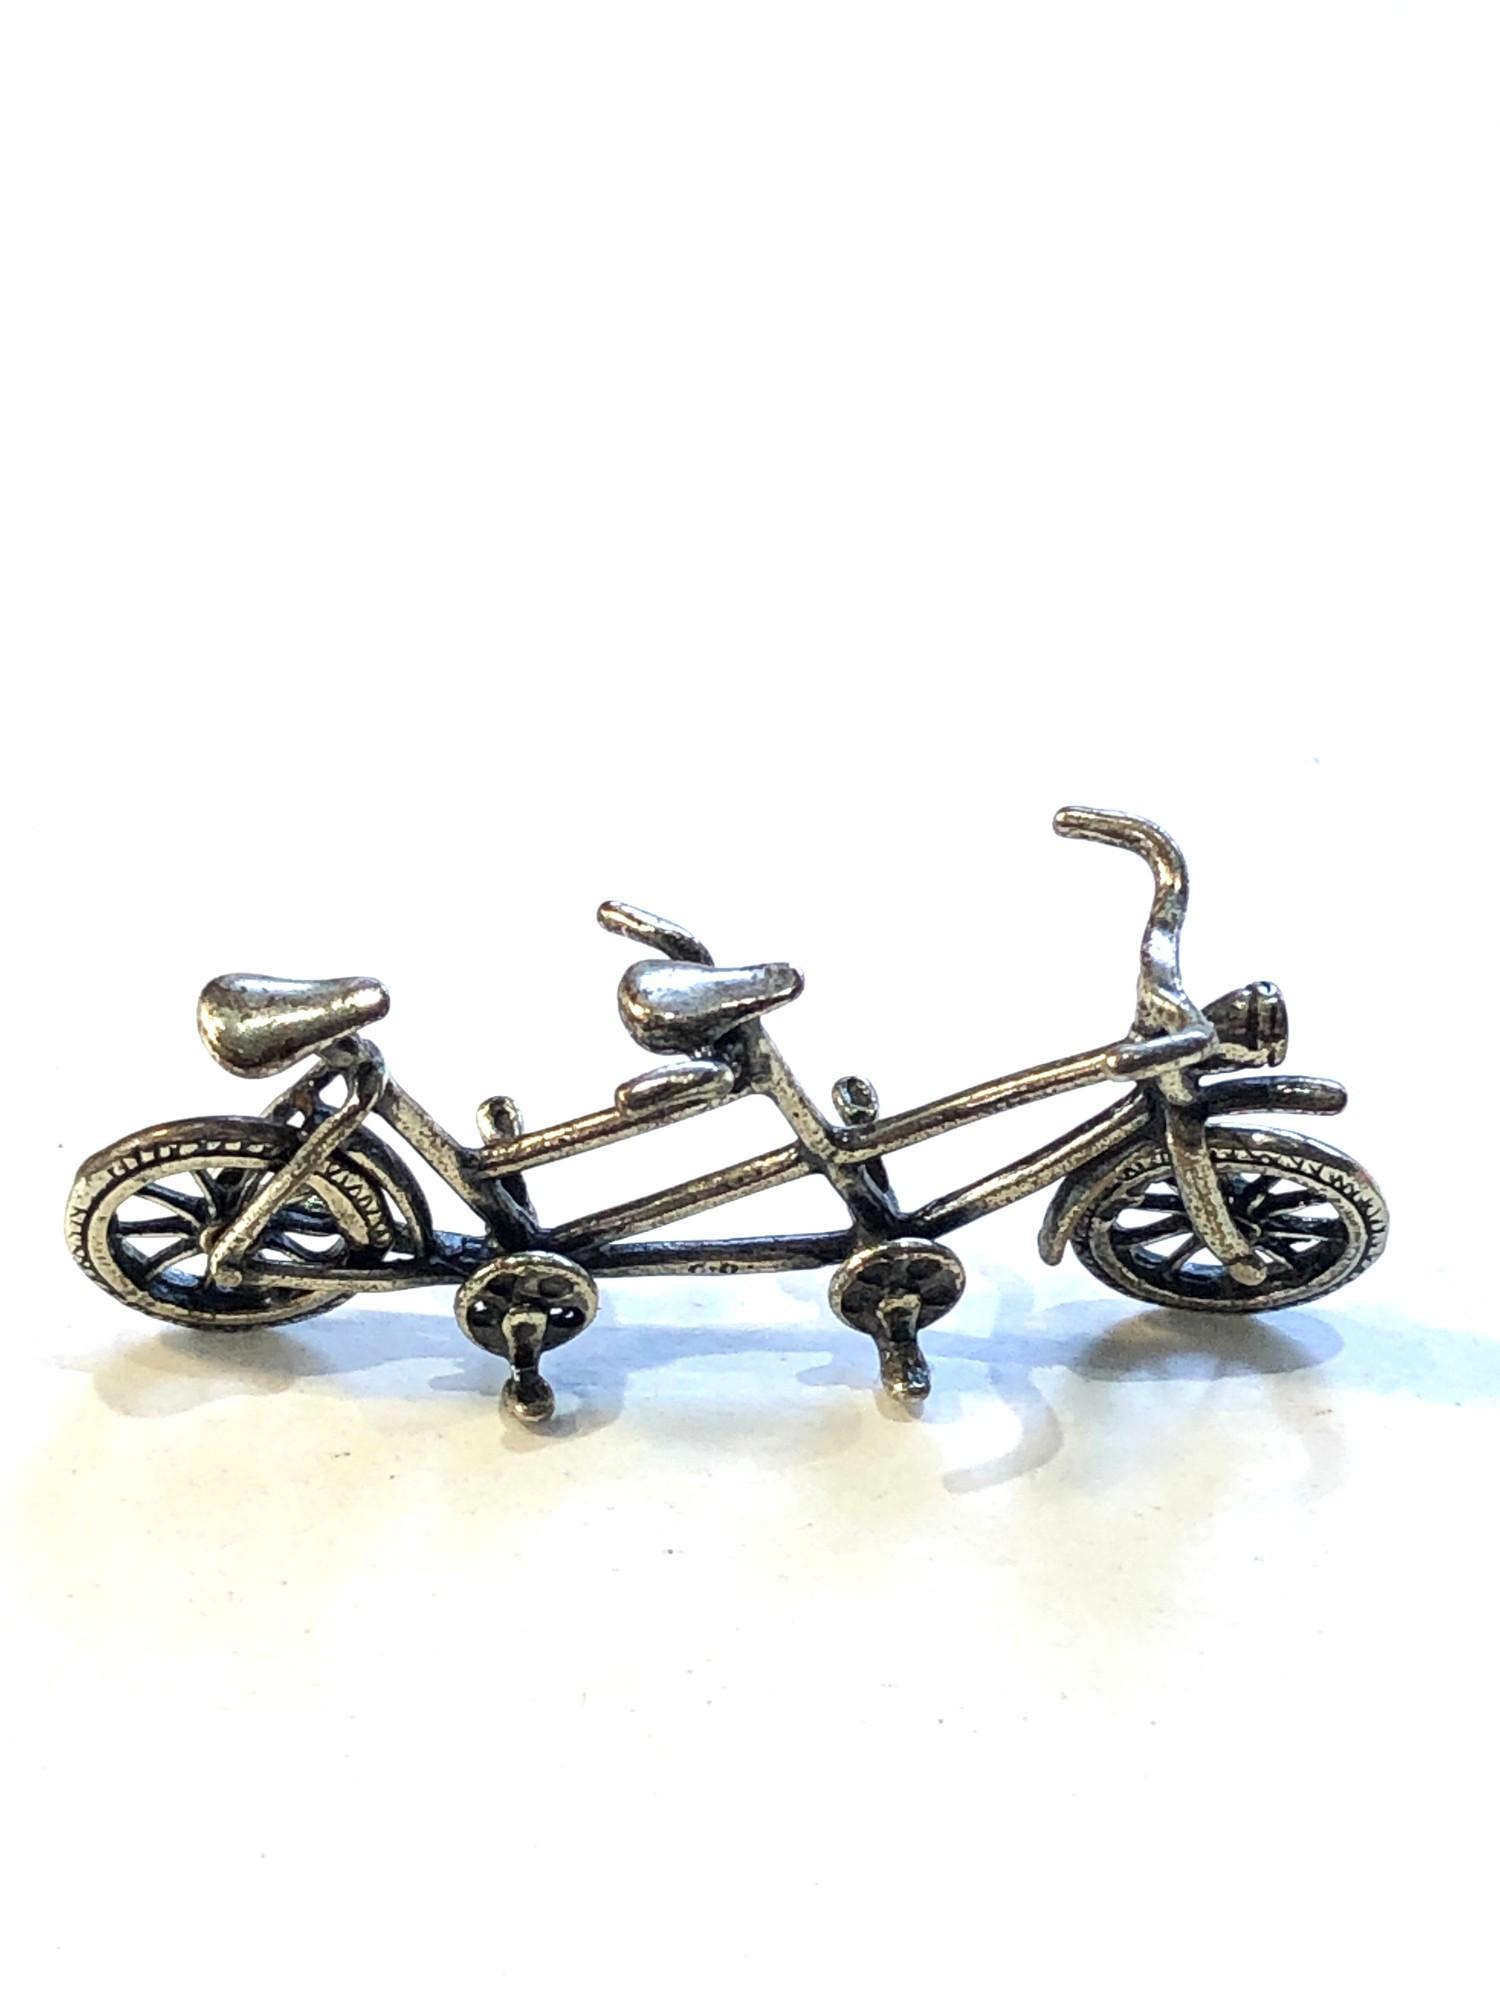 Vintage dutch silver miniature tricycle dutch silver hallmark - Image 3 of 3